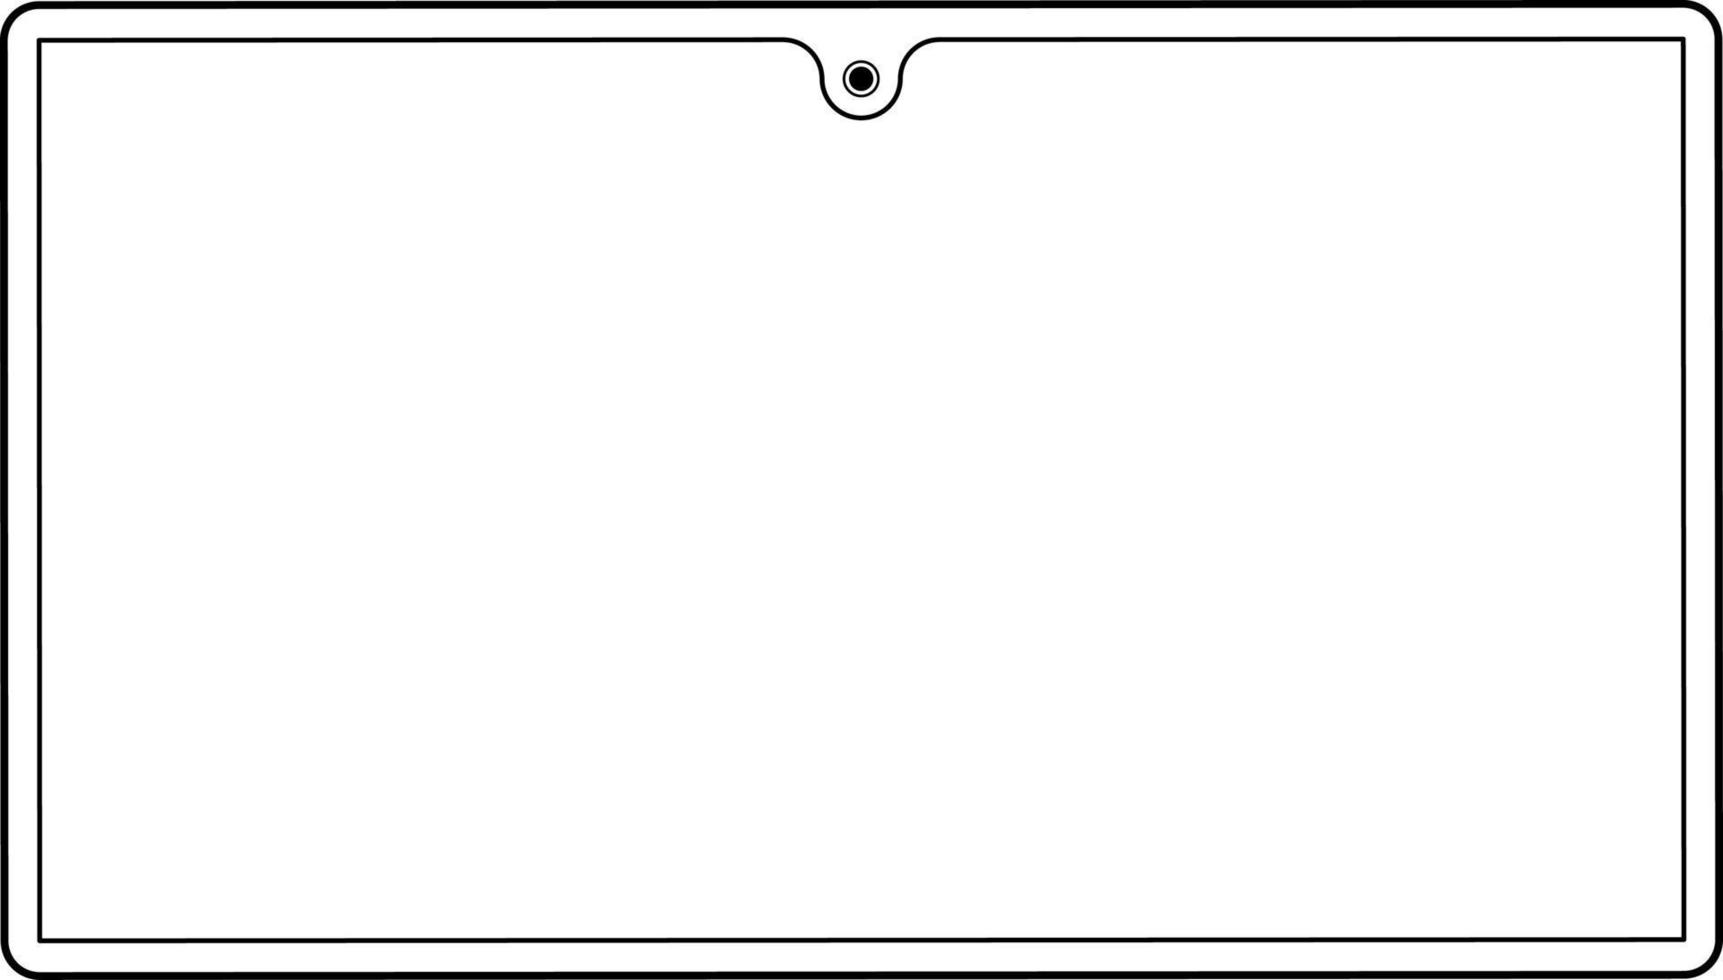 marco de la computadora de la tableta del esquema. maqueta de la computadora de la tableta vector